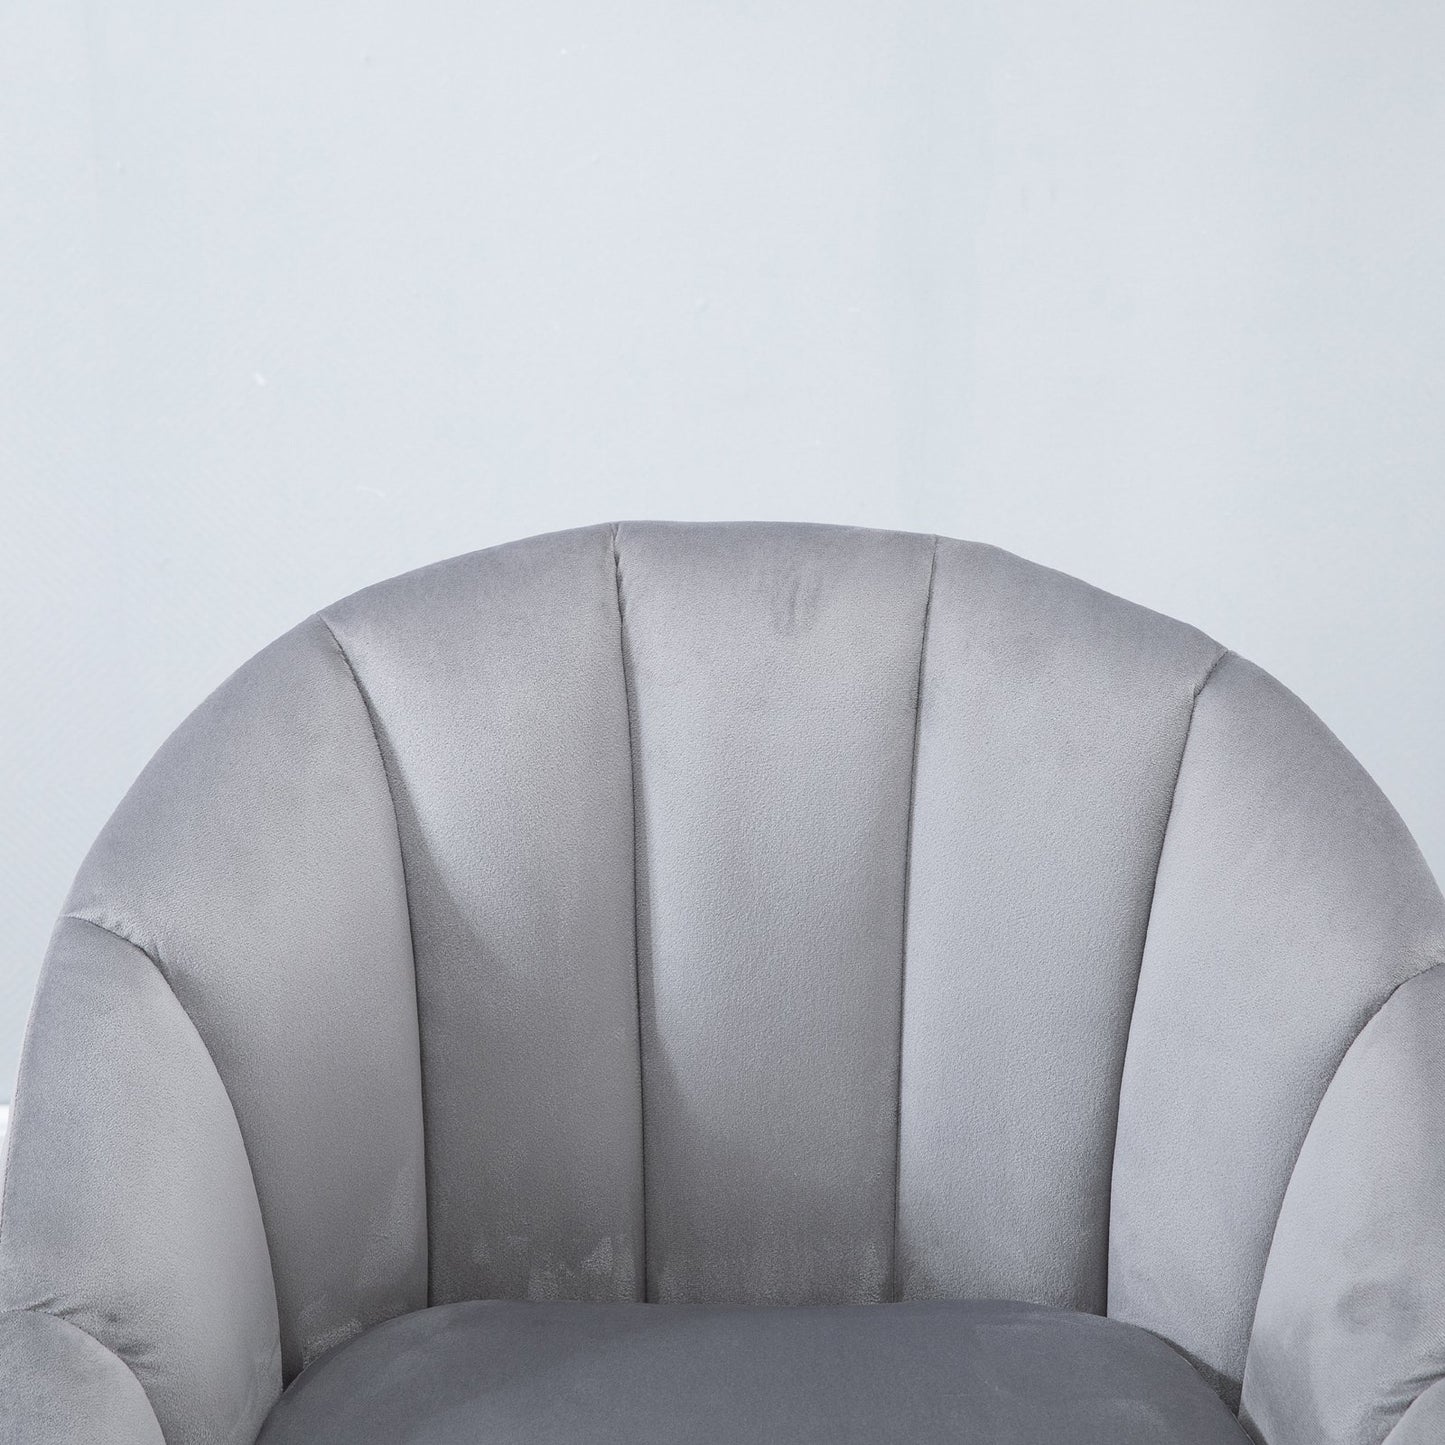 HOMCOM Decadent Single Lounge Chair in Velvet-Look Upholstery w/ Wooden Legs Grey